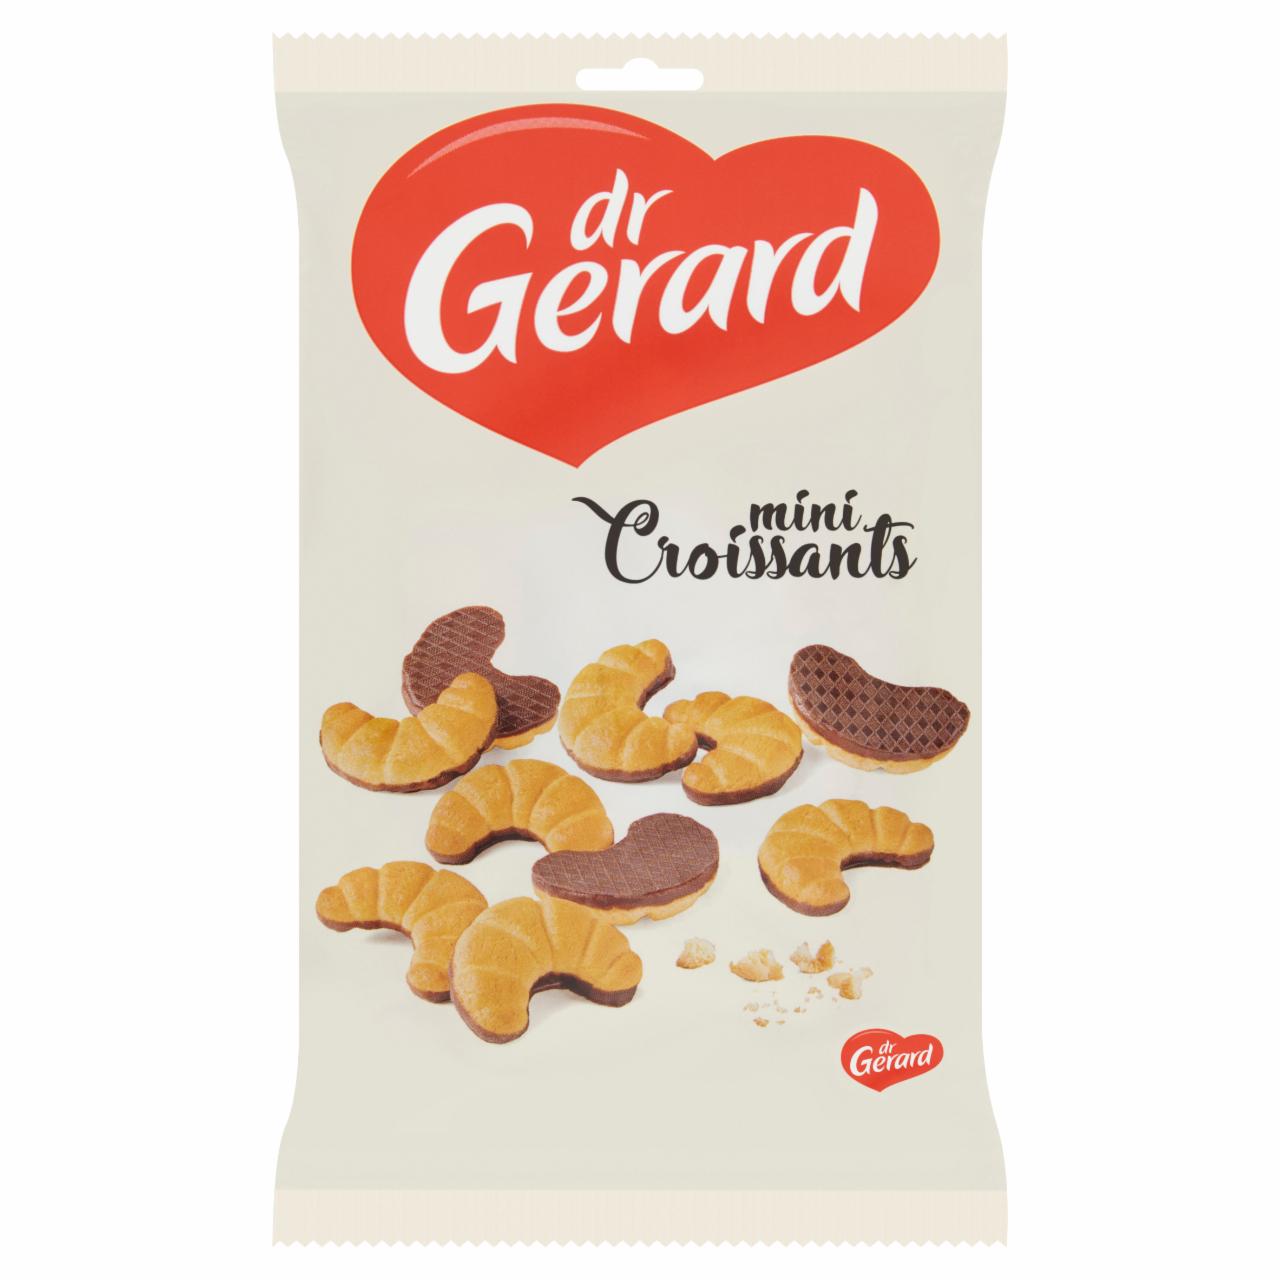 Képek - Dr Gerard Mini Croissants ropogós keksz kakaós mázzal 165 g